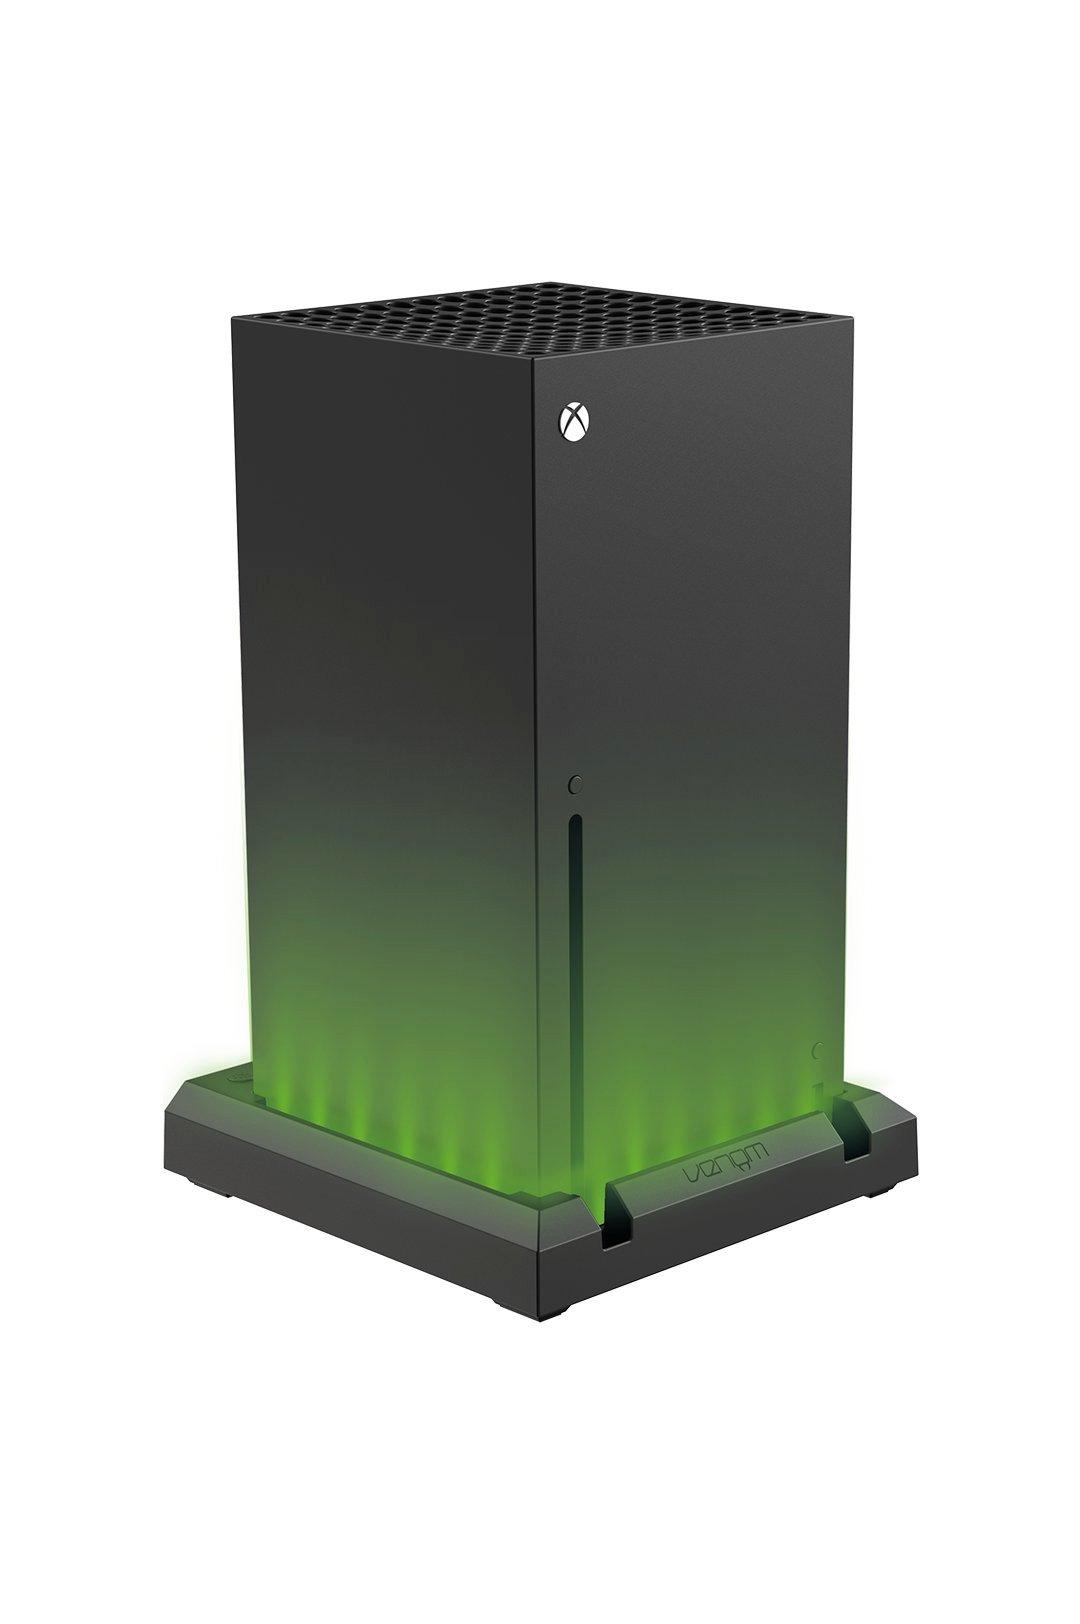 Venom Xbox LED Light-up Console Stand